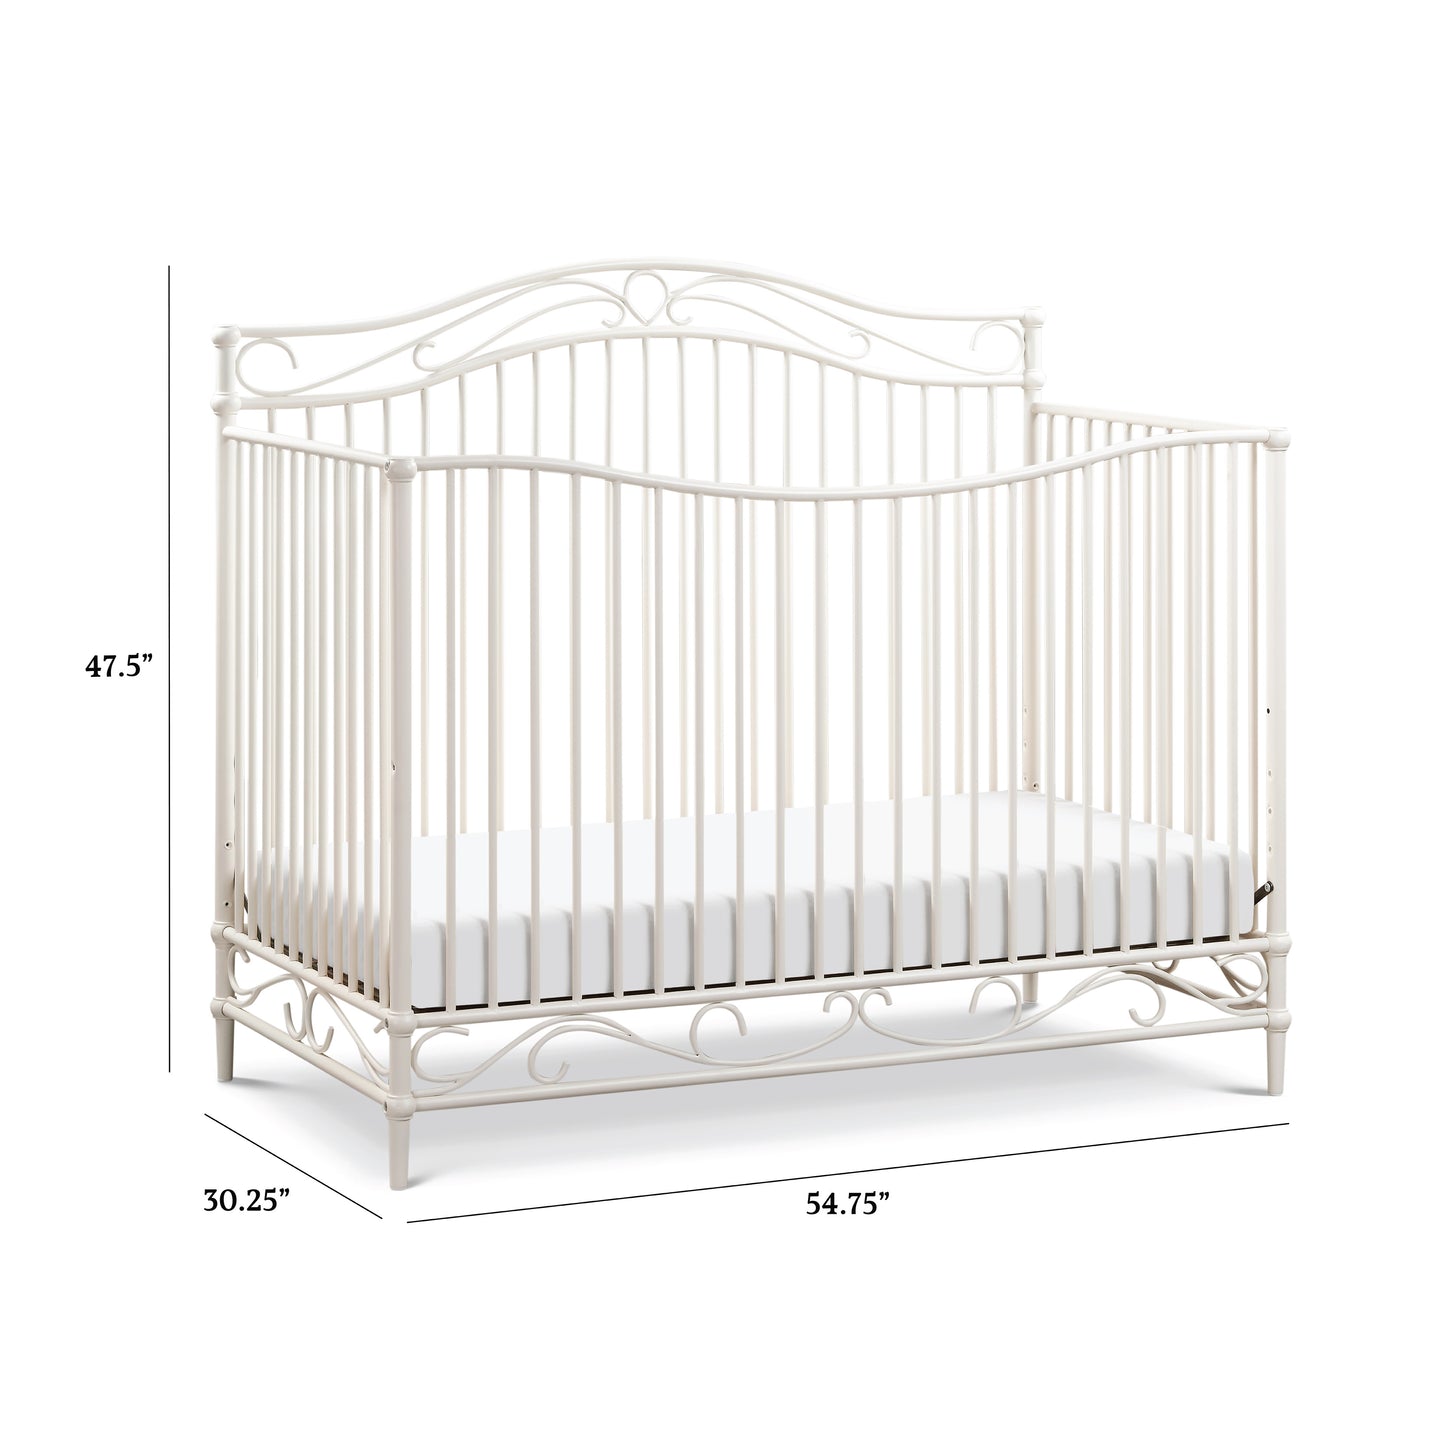 M21501VWH,Noelle 4-in-1 Convertible Crib in Vintage White